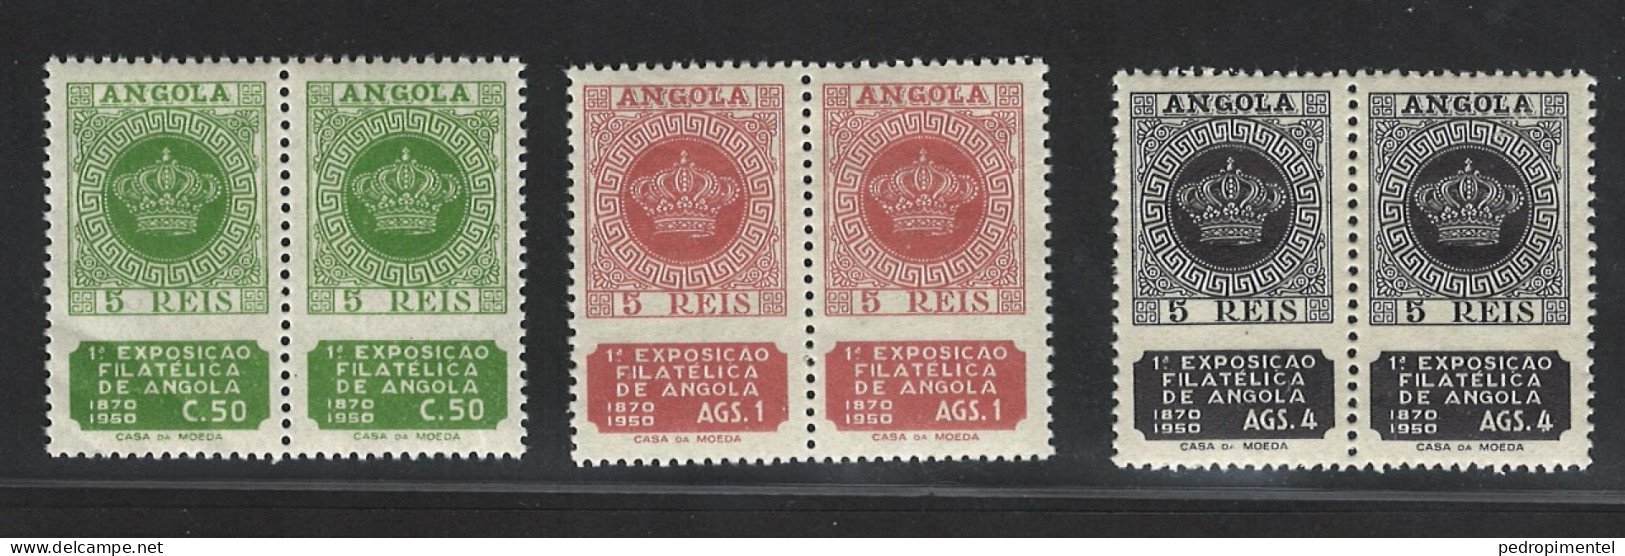 Portugal Angola 1950 "Philatelic Exhibition" MNH Mundifil Angola #321-323 (Pair) - Angola